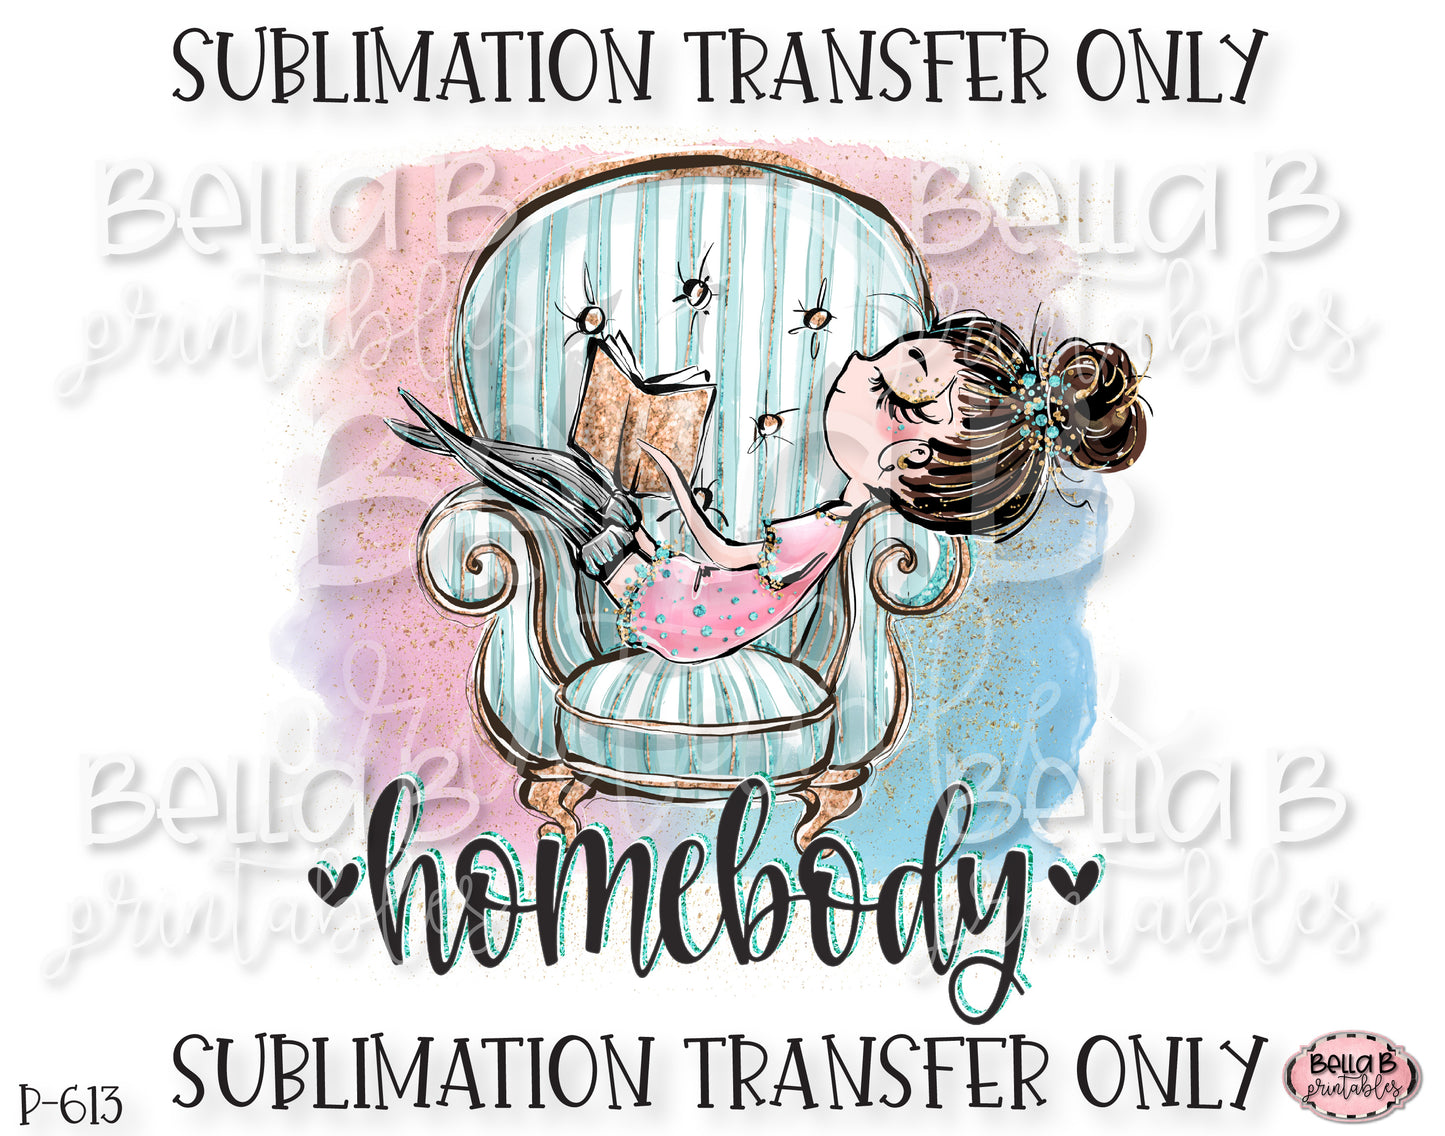 Homebody Sublimation Transfer, Ready To Press, Heat Press Transfer, Sublimation Print